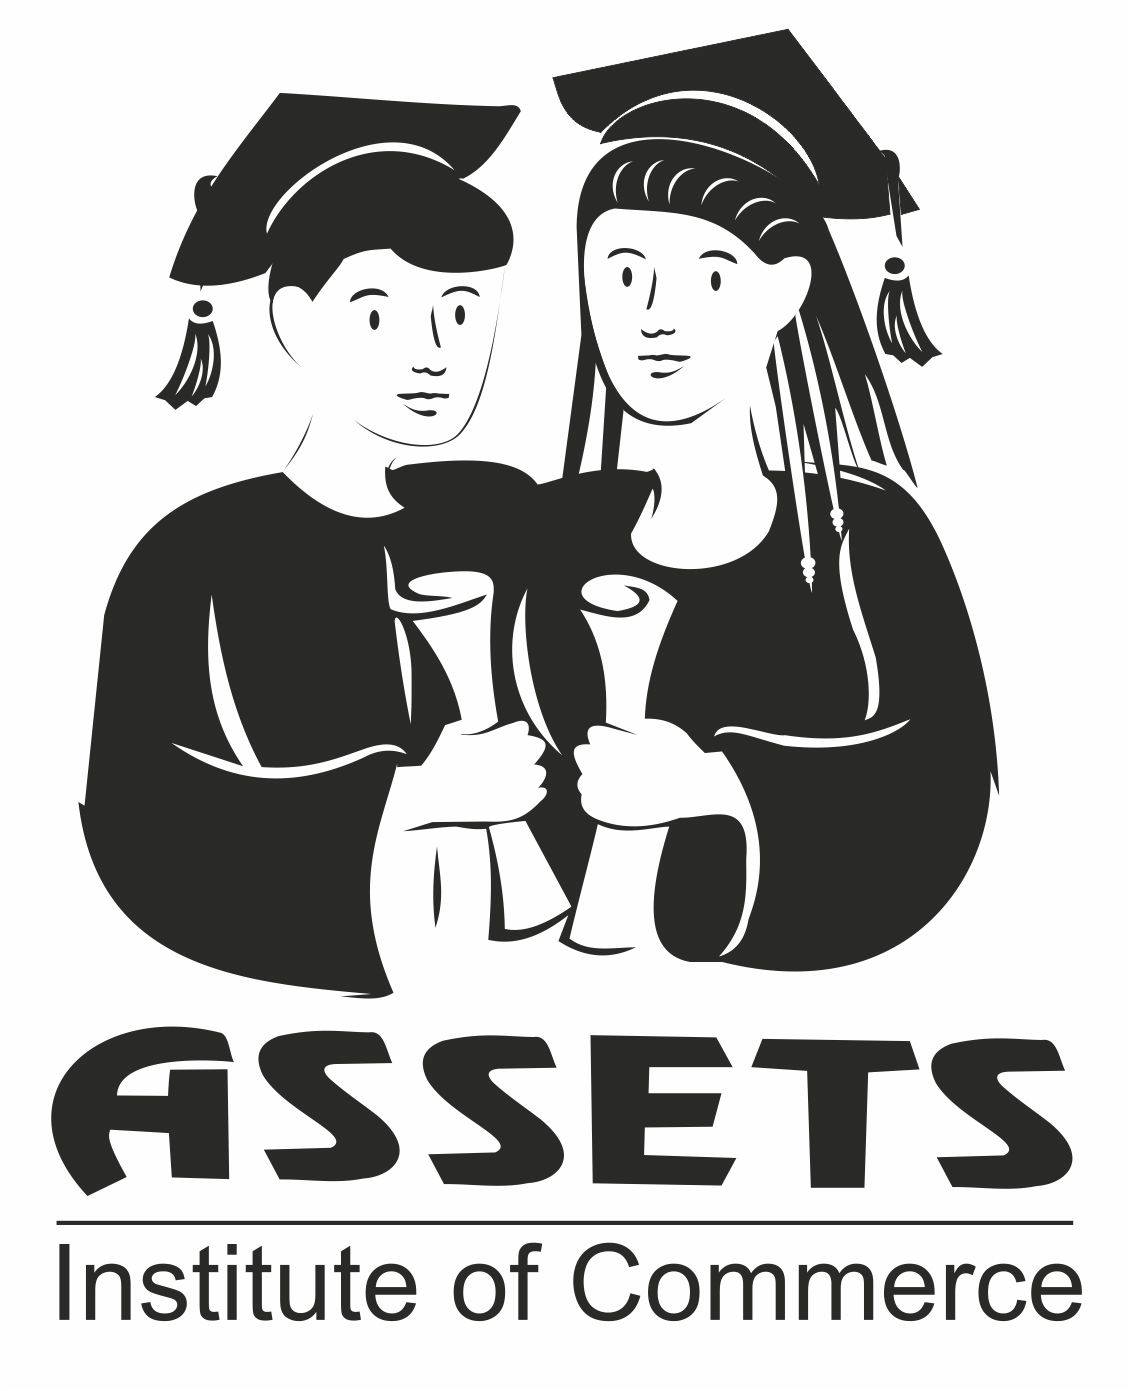 Assets logo